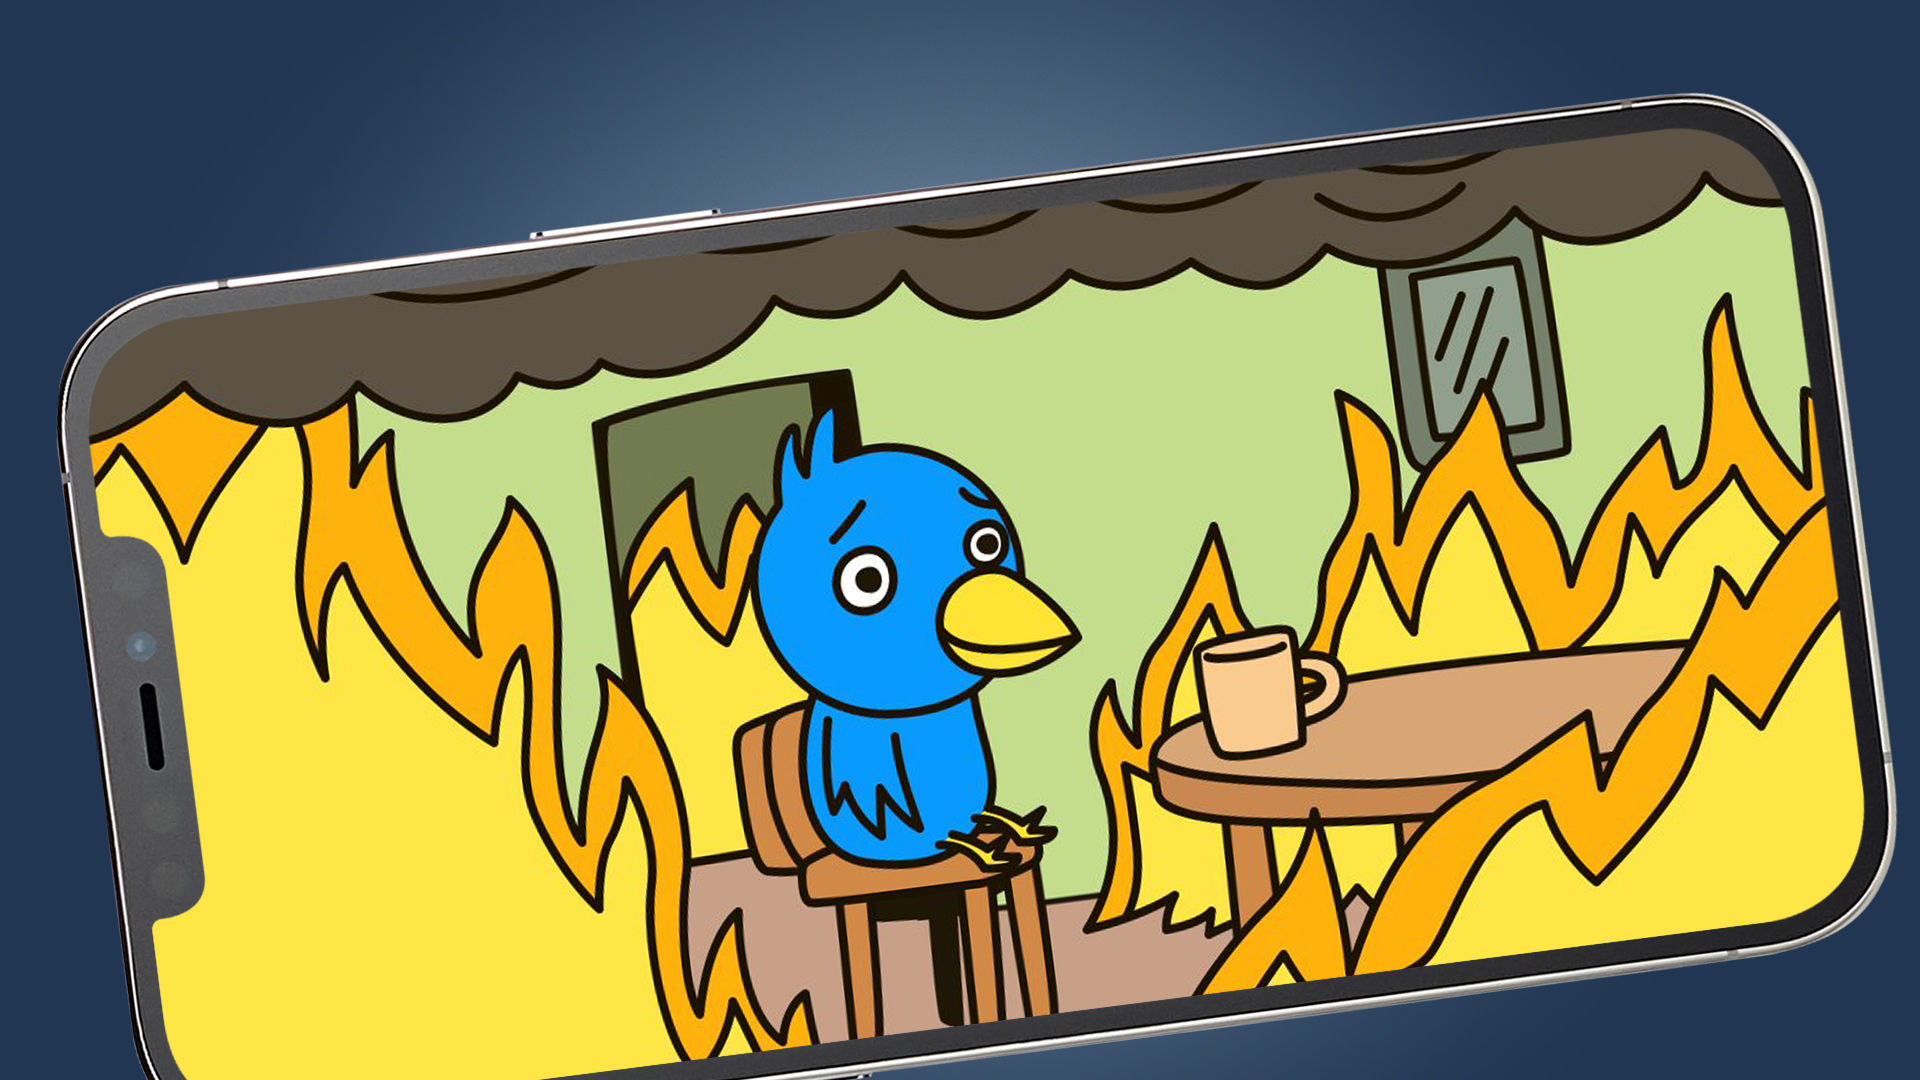 A phone screen showing a Twitter cartoon made by Twitterific